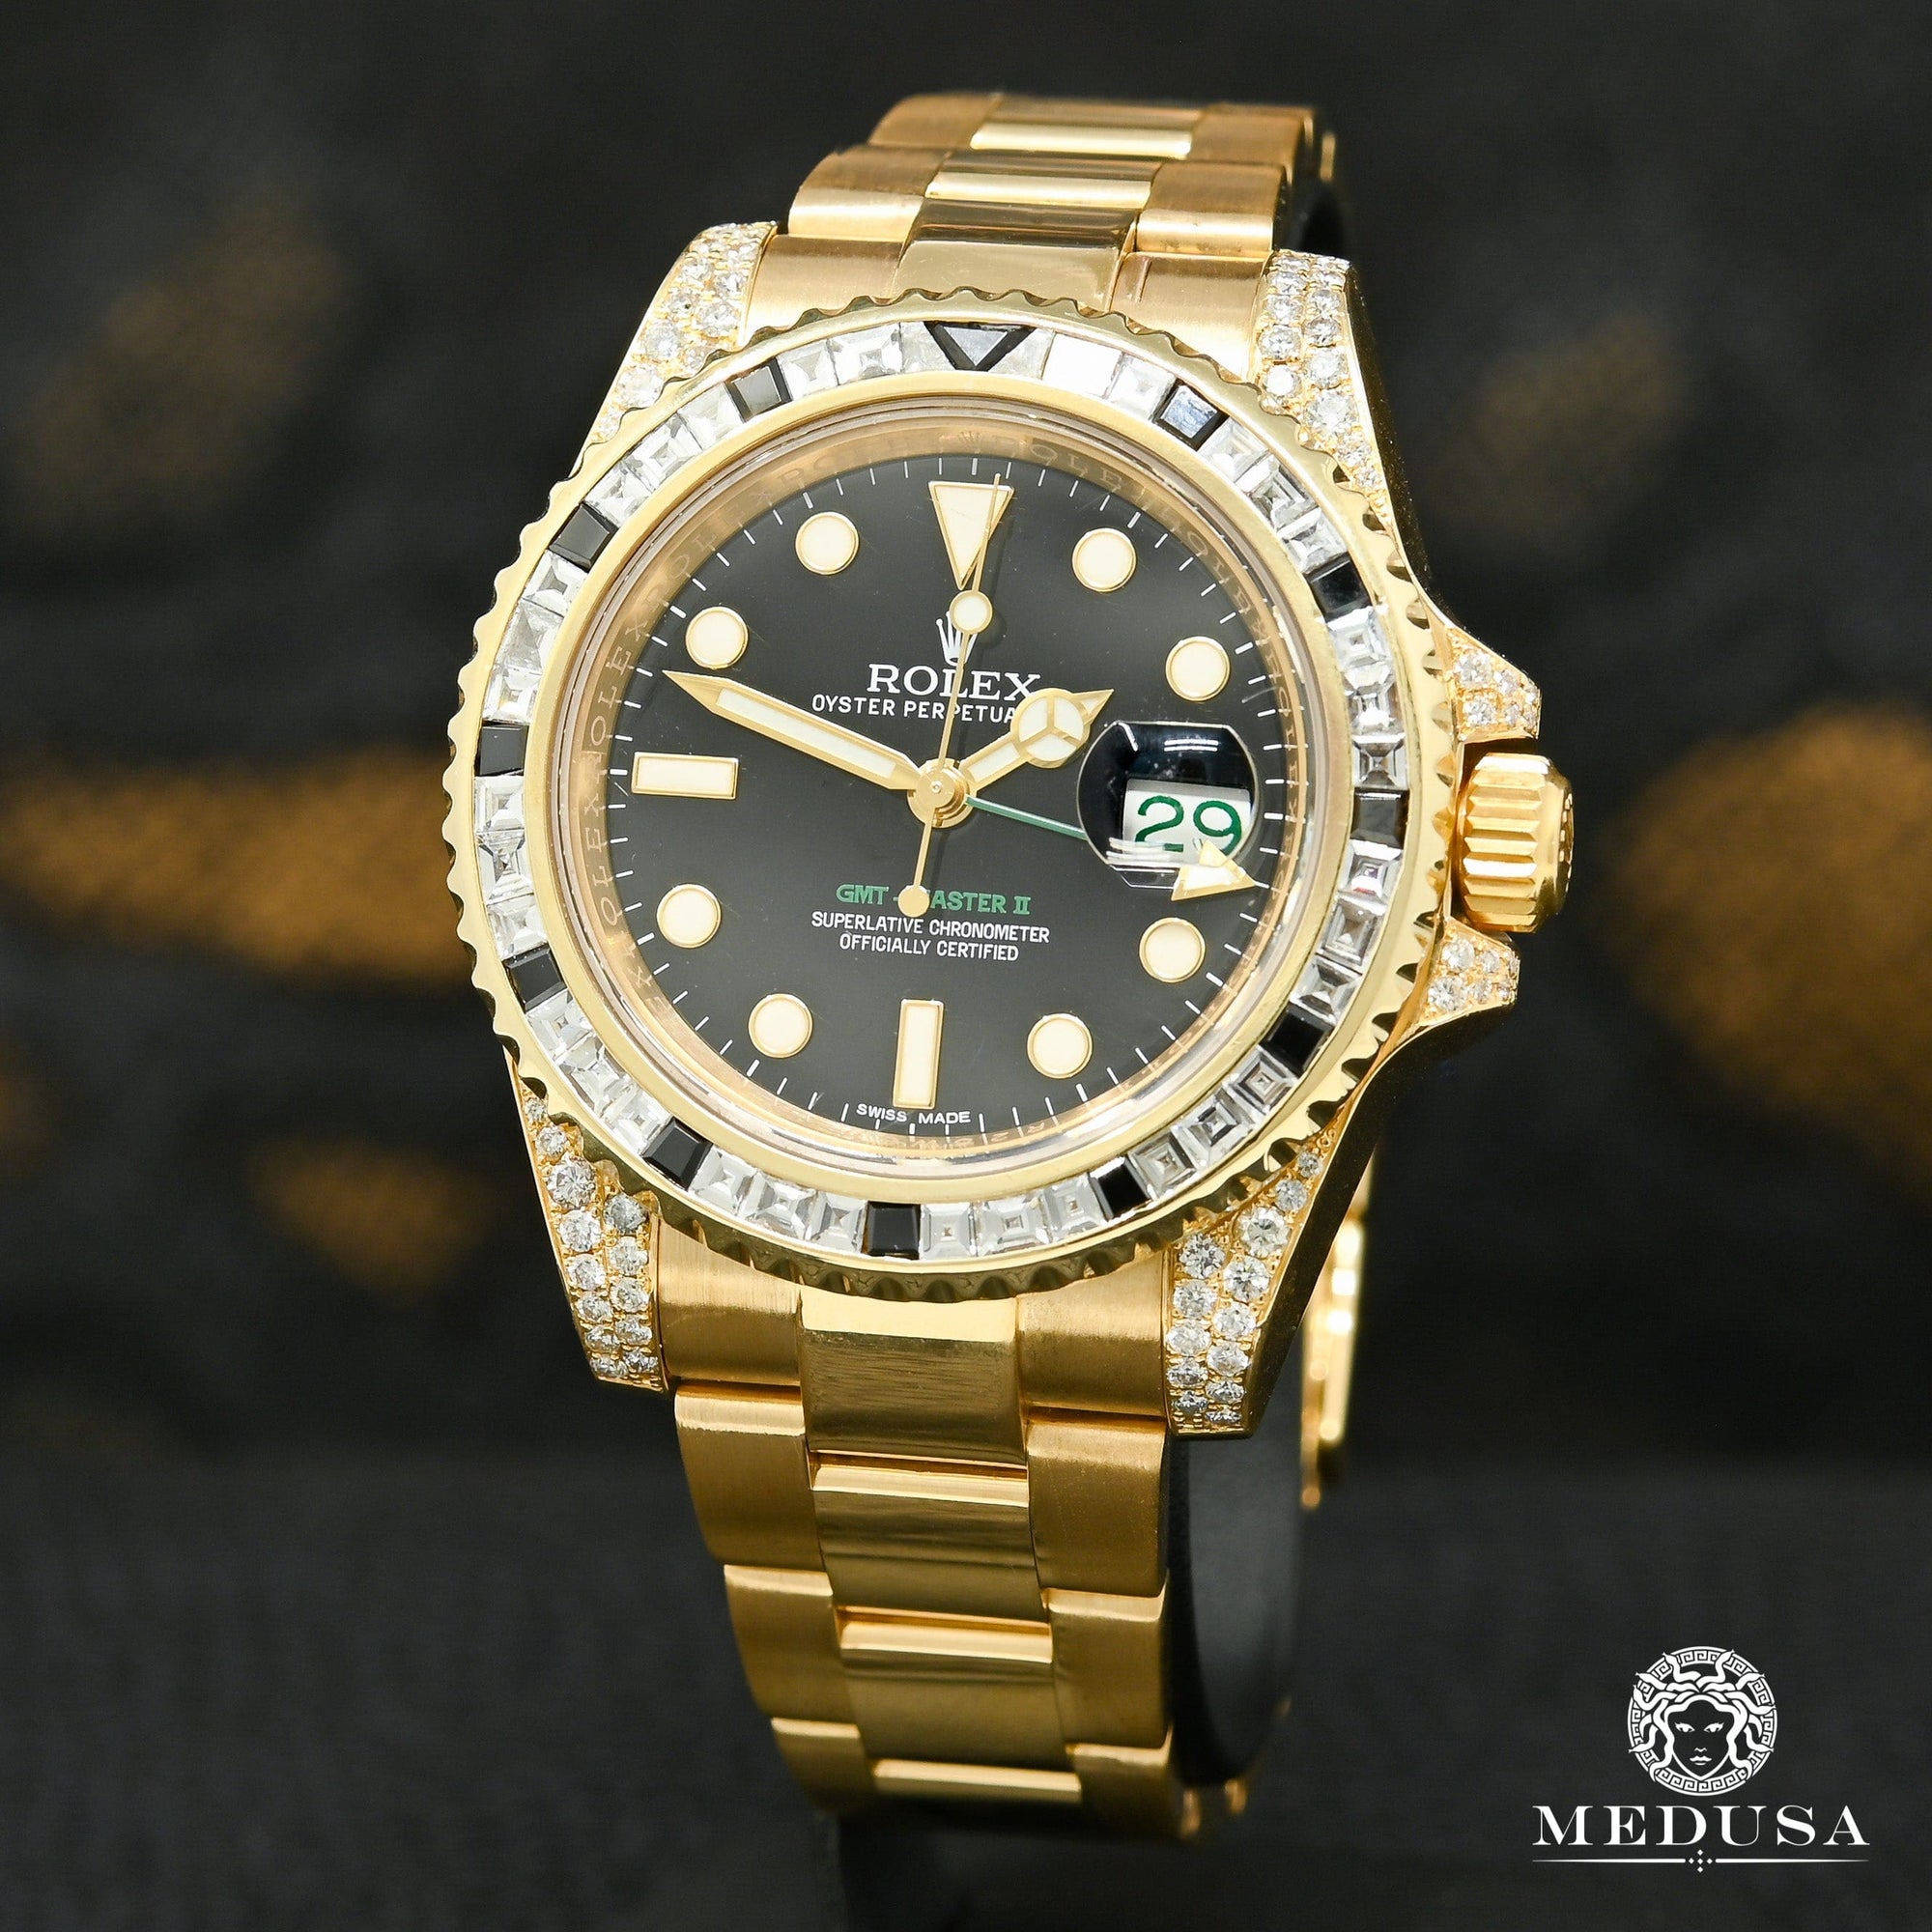 Rolex watch | Rolex GMT-Master II 40mm Men's Watch - Gold Iced Yellow Gold